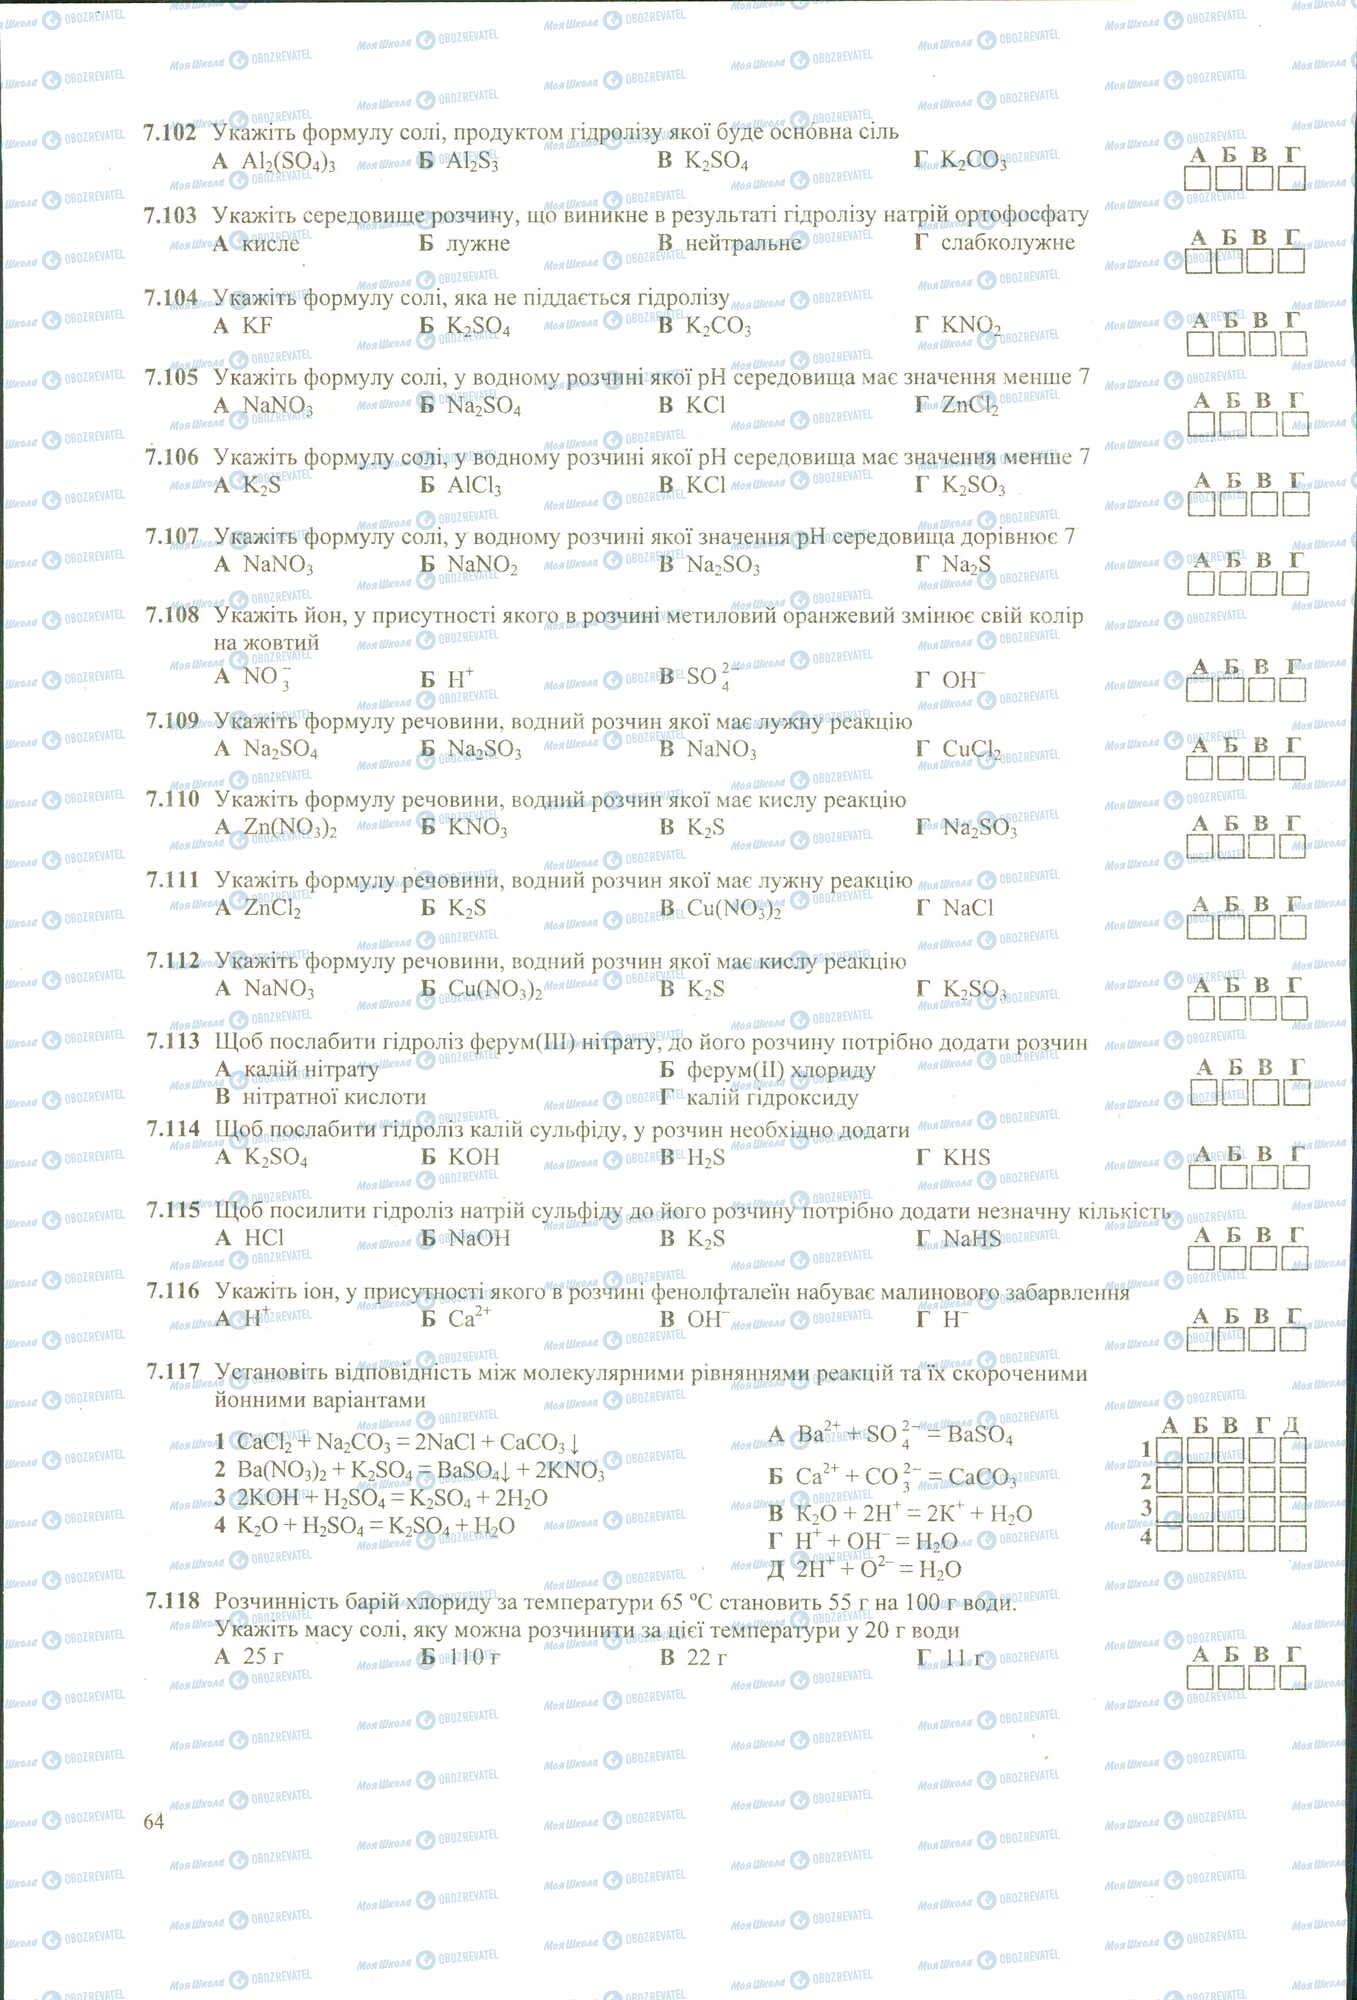 ЗНО Химия 11 класс страница 102-118